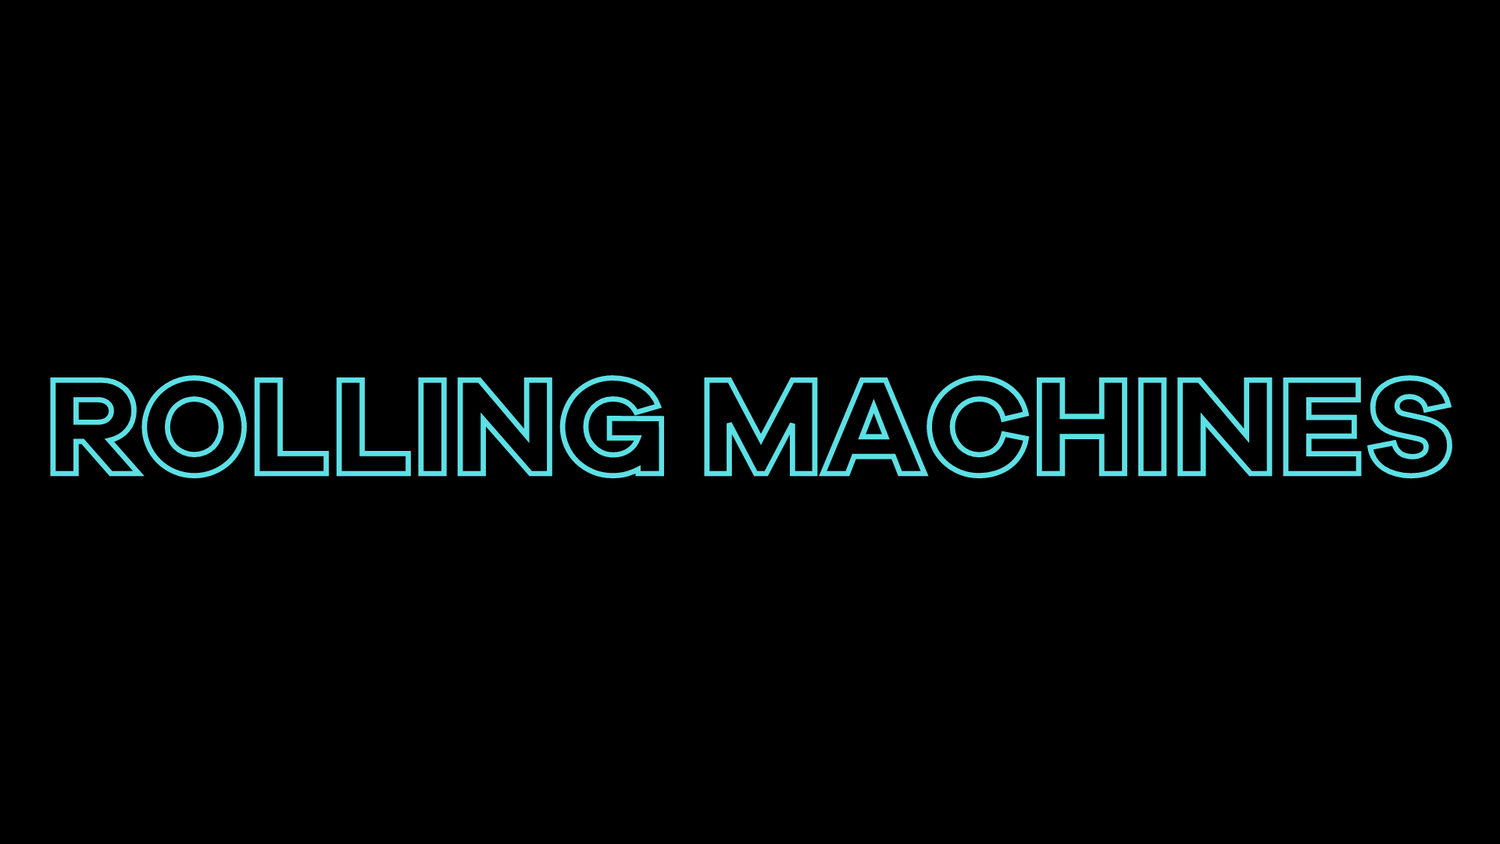 Rolling Machines